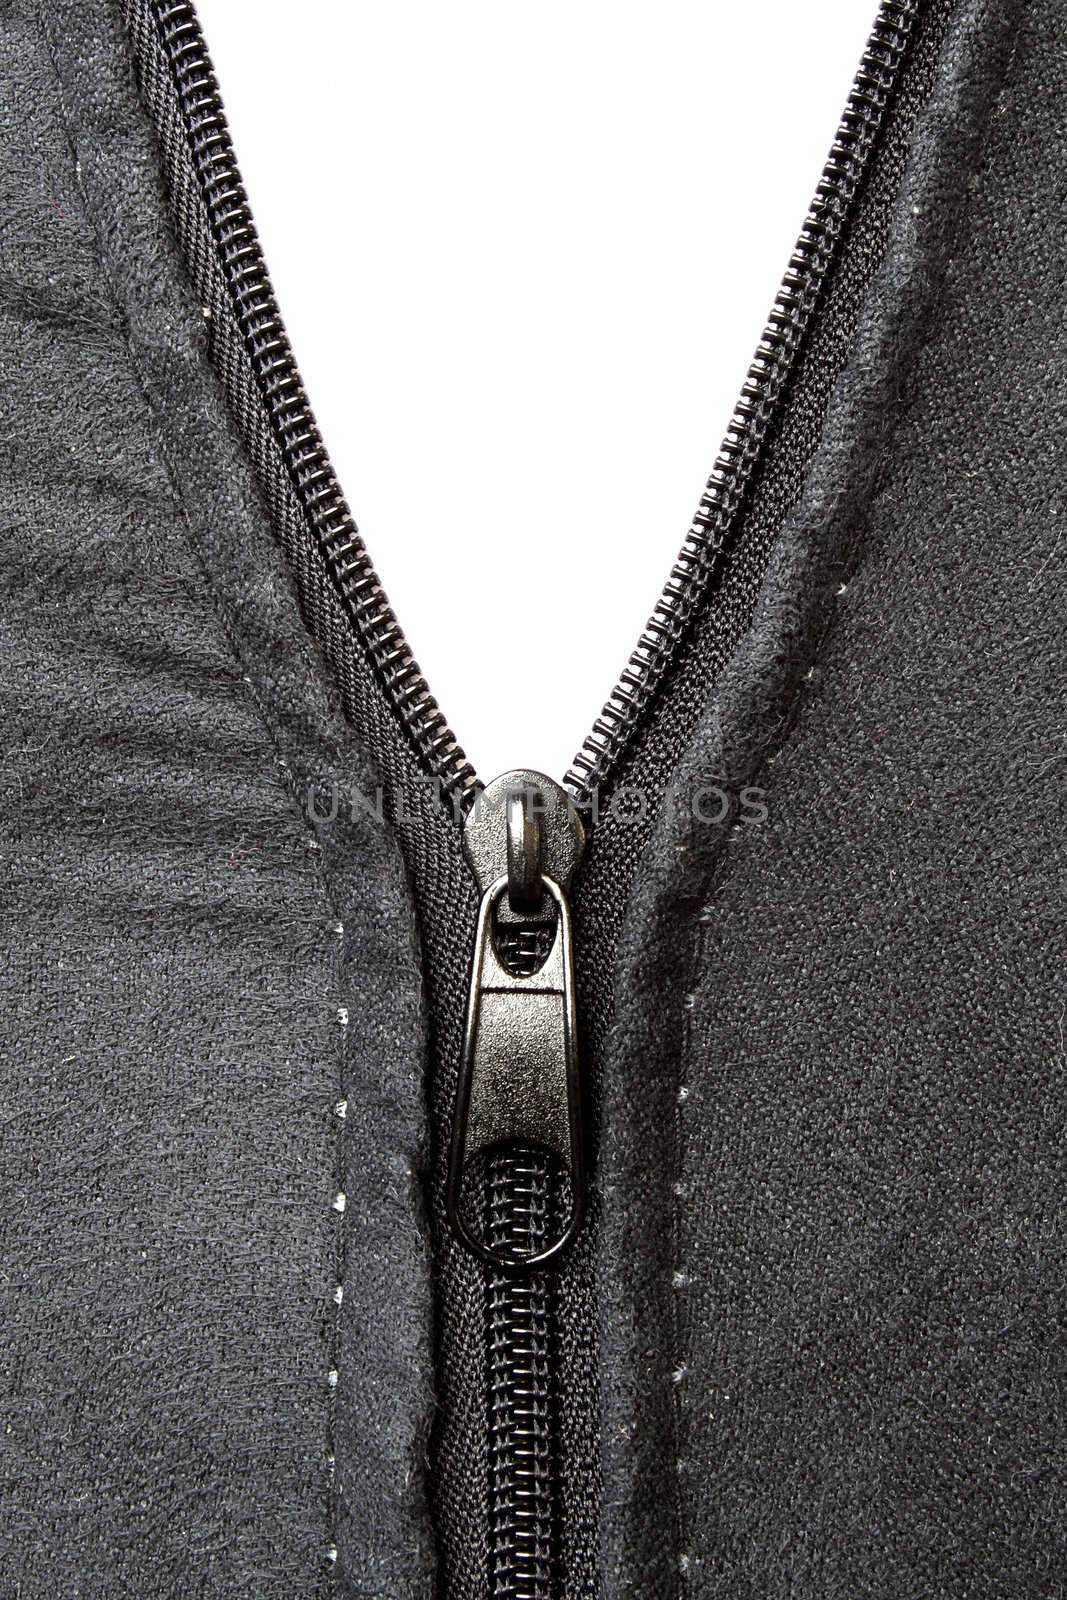 Black zipper opening, white background